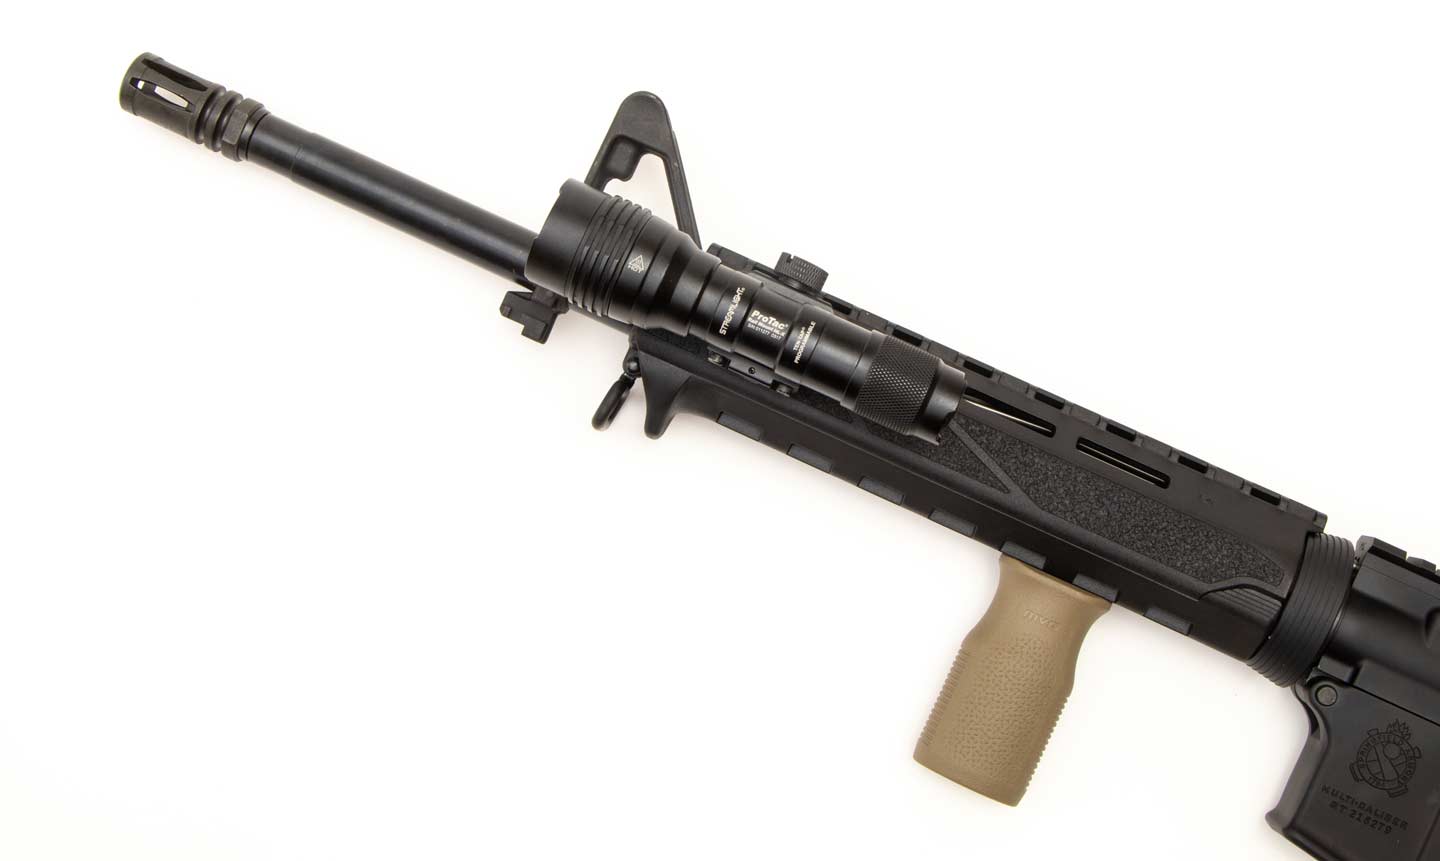 Mounted flashlight on a home defense rifle